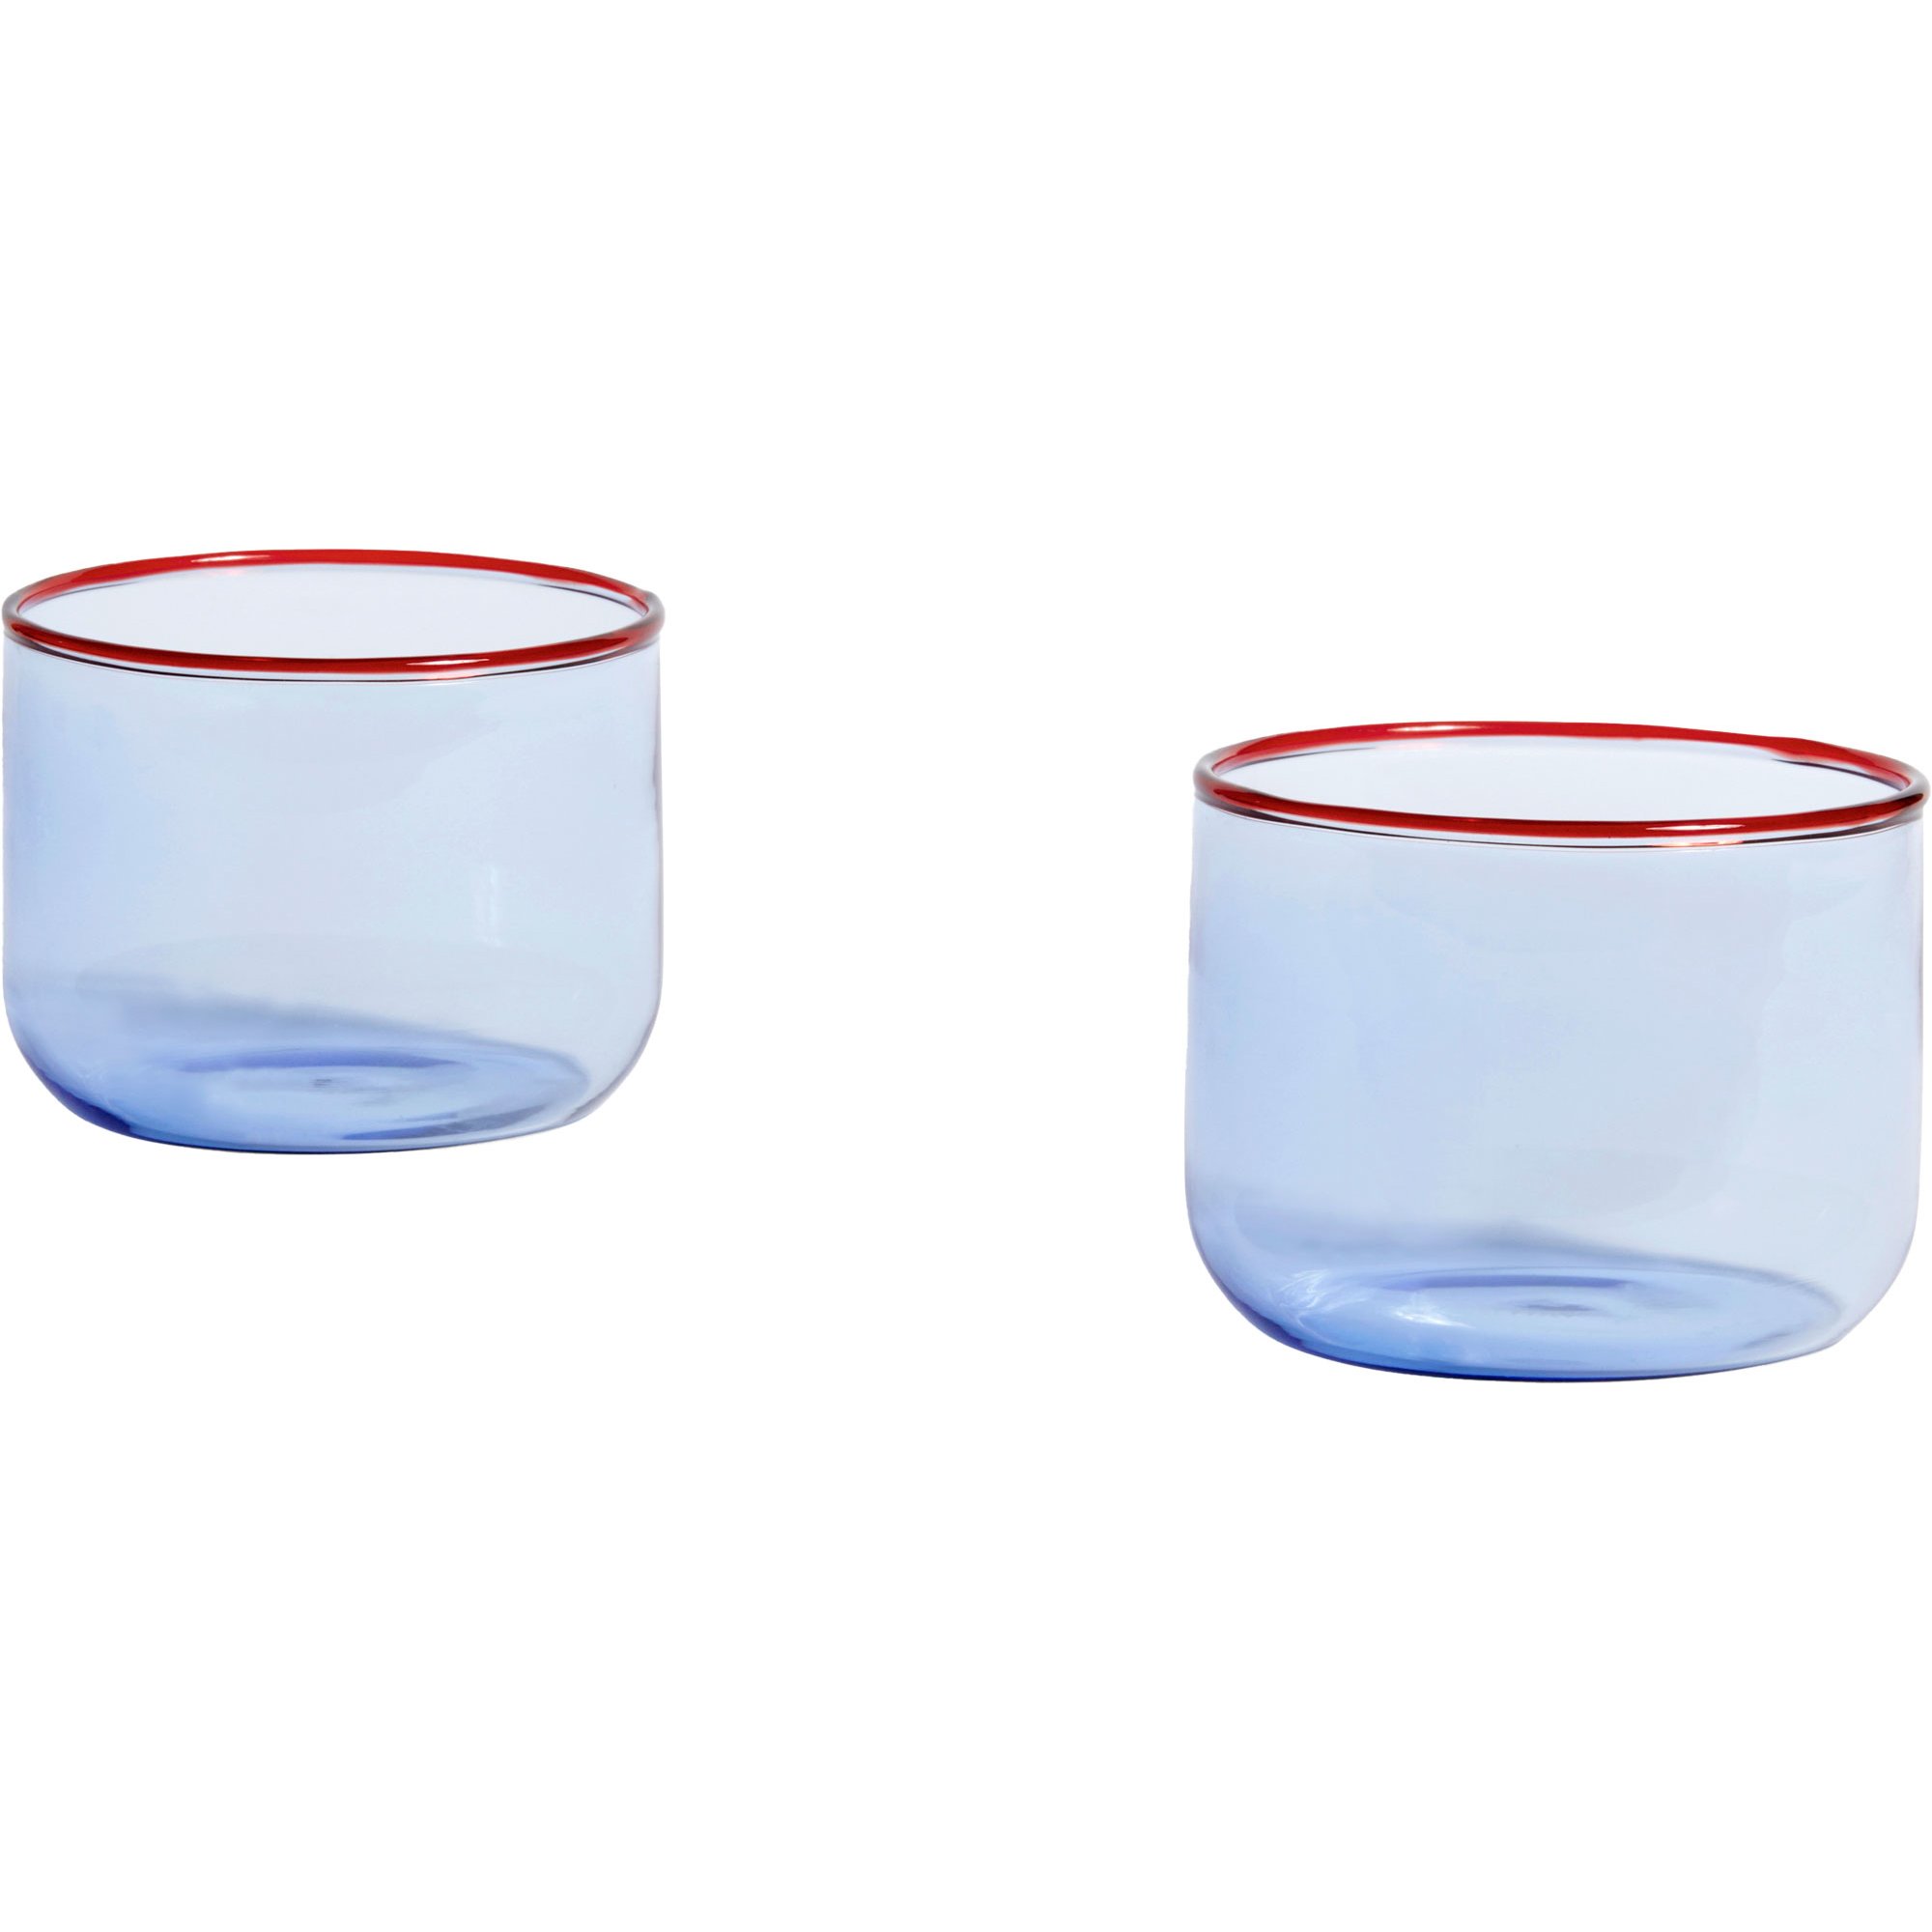 HAY Tint glas 2 st, ljusblå/röd